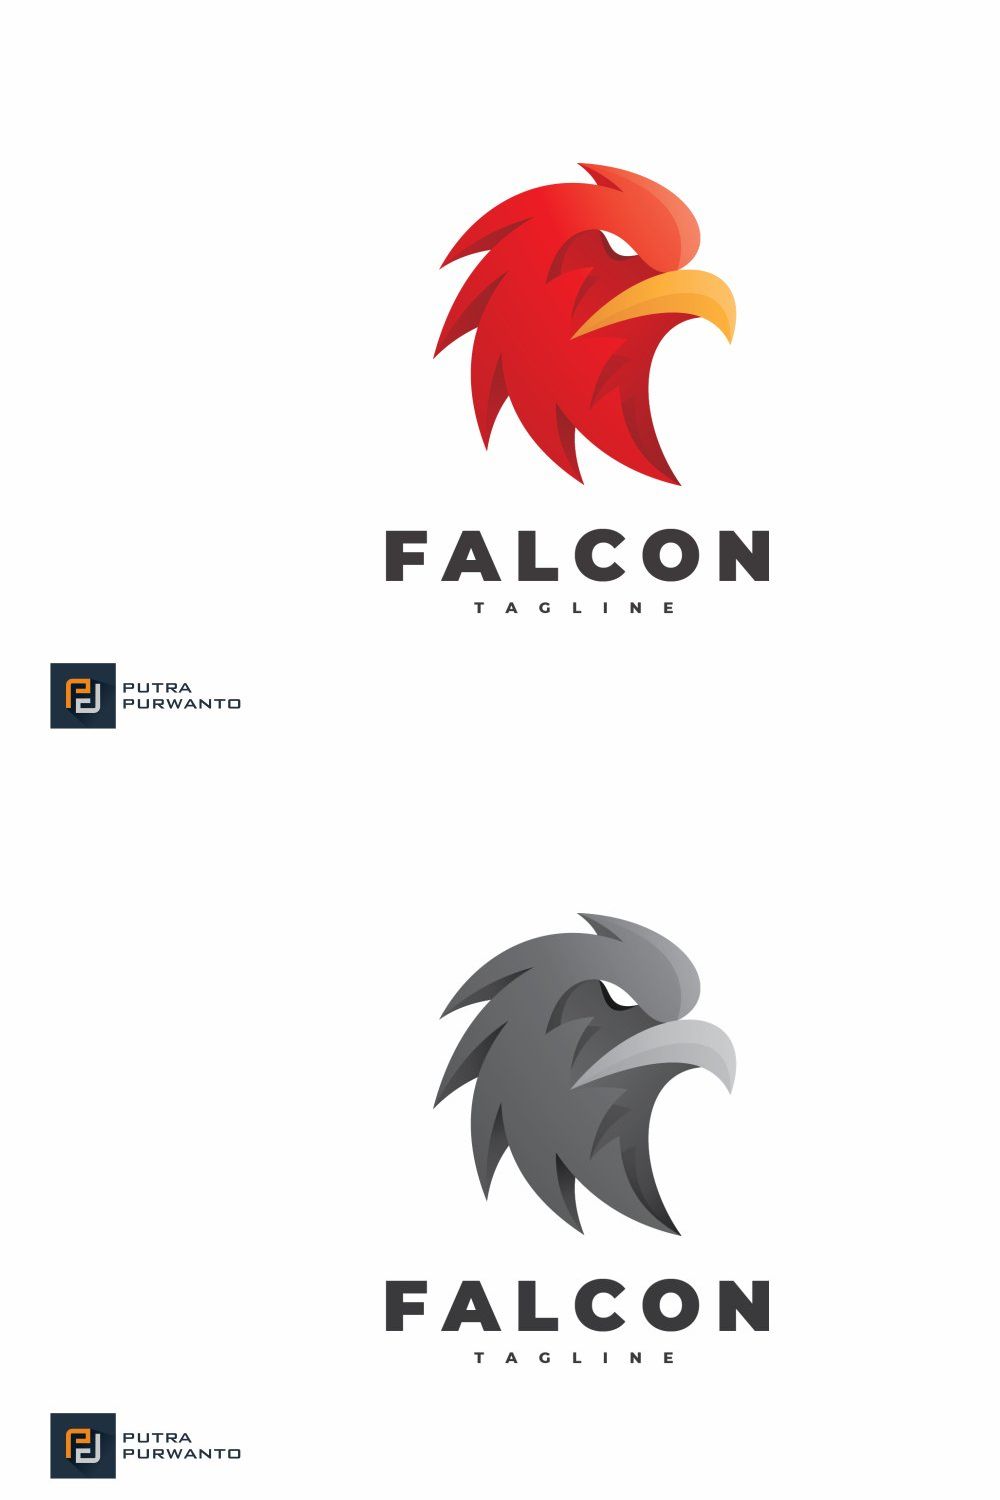 Falcon - Logo Template pinterest preview image.